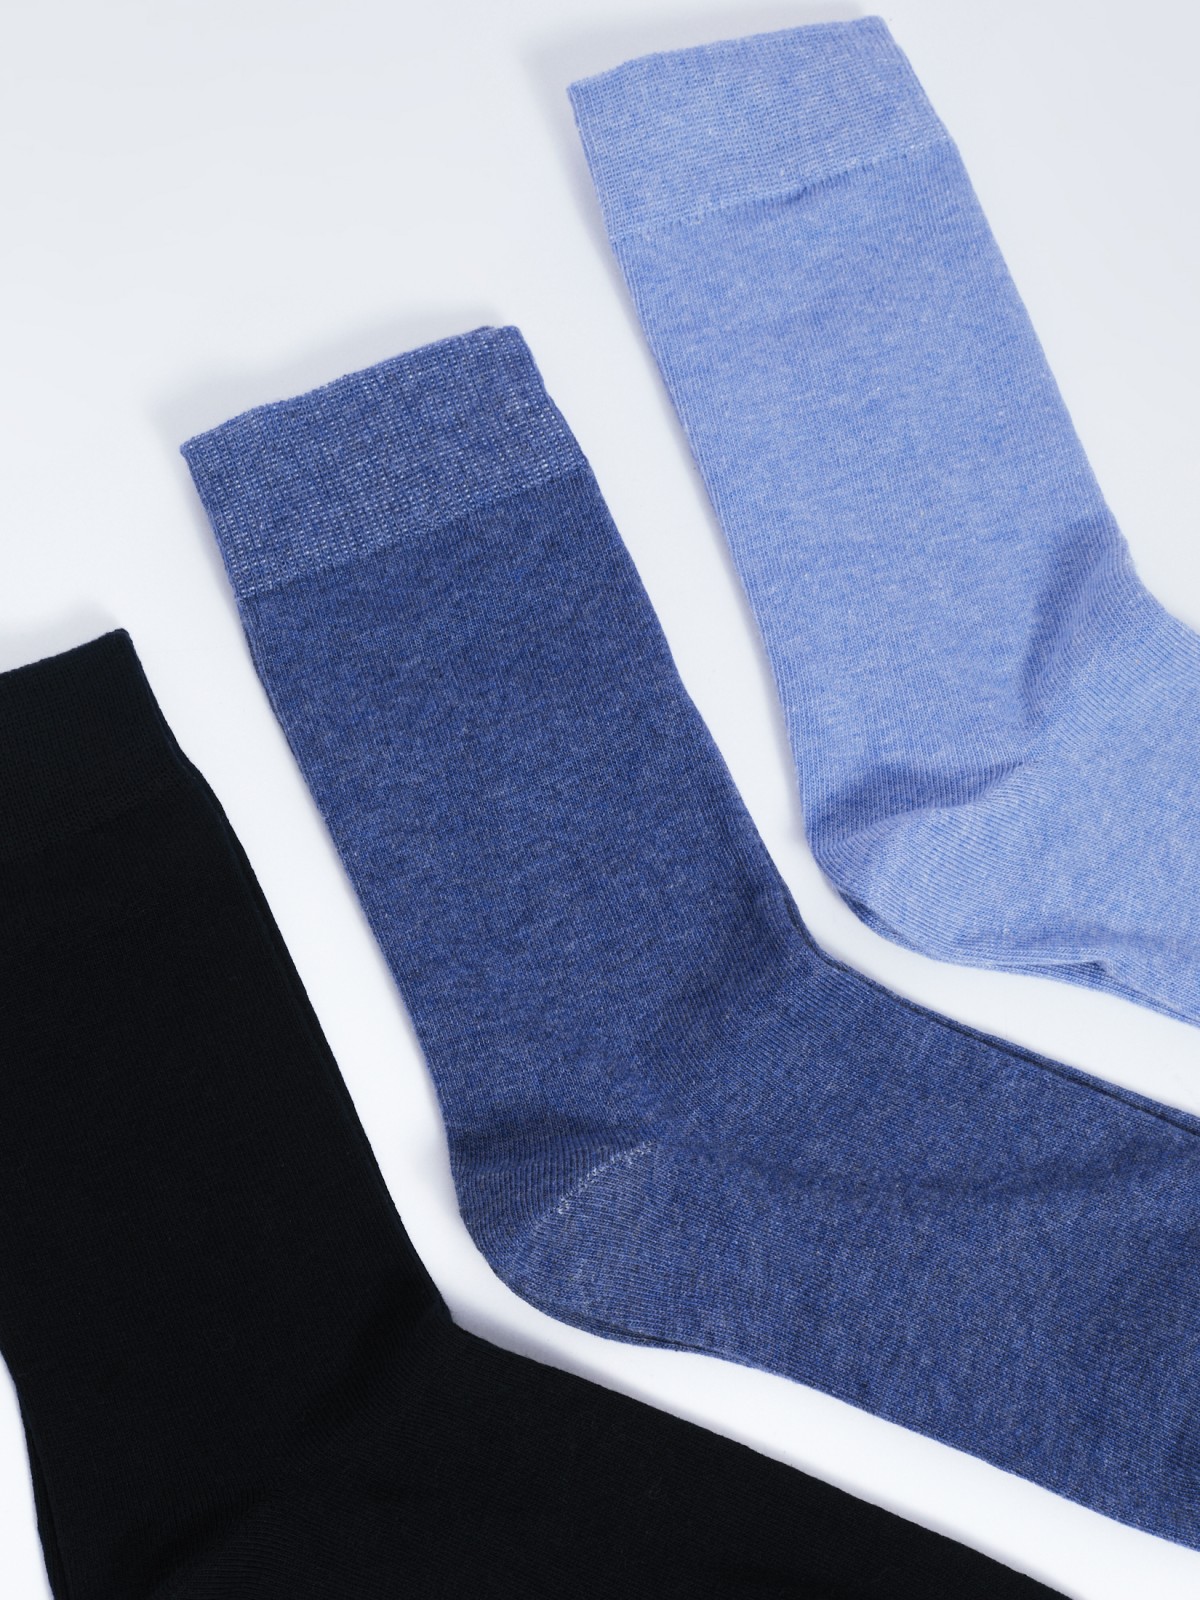 Набор носков (3 пары в комплекте) zolla 01331990Z025, цвет темно-синий, размер 25-27 - фото 2